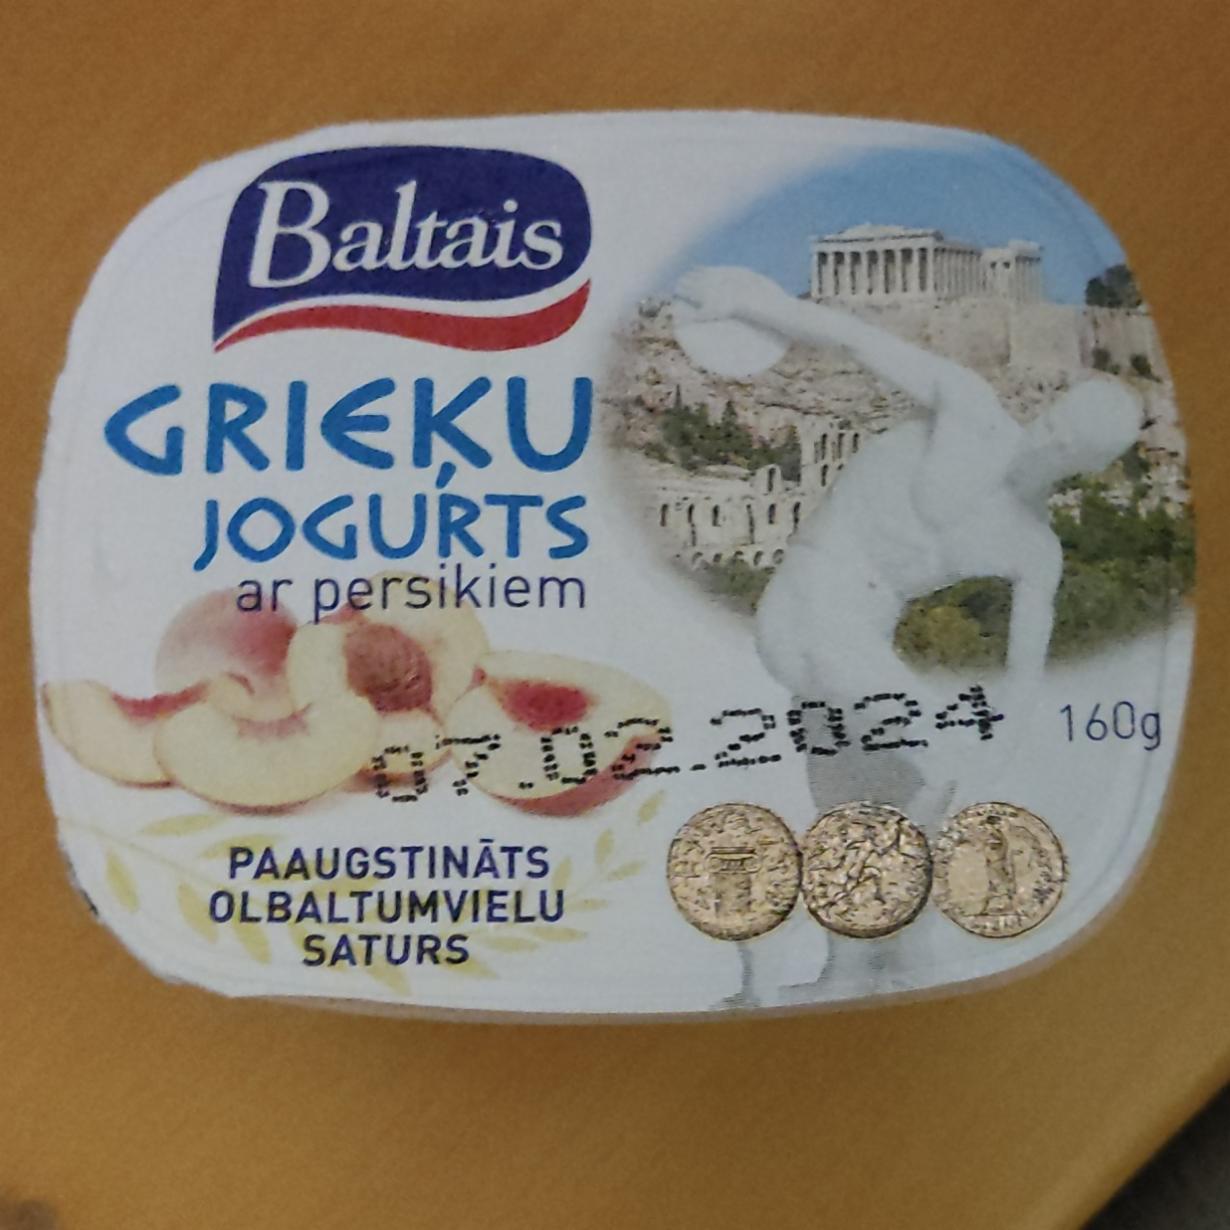 Фото - Йогурт персиковий грецький Grieku Jogurts Baltais